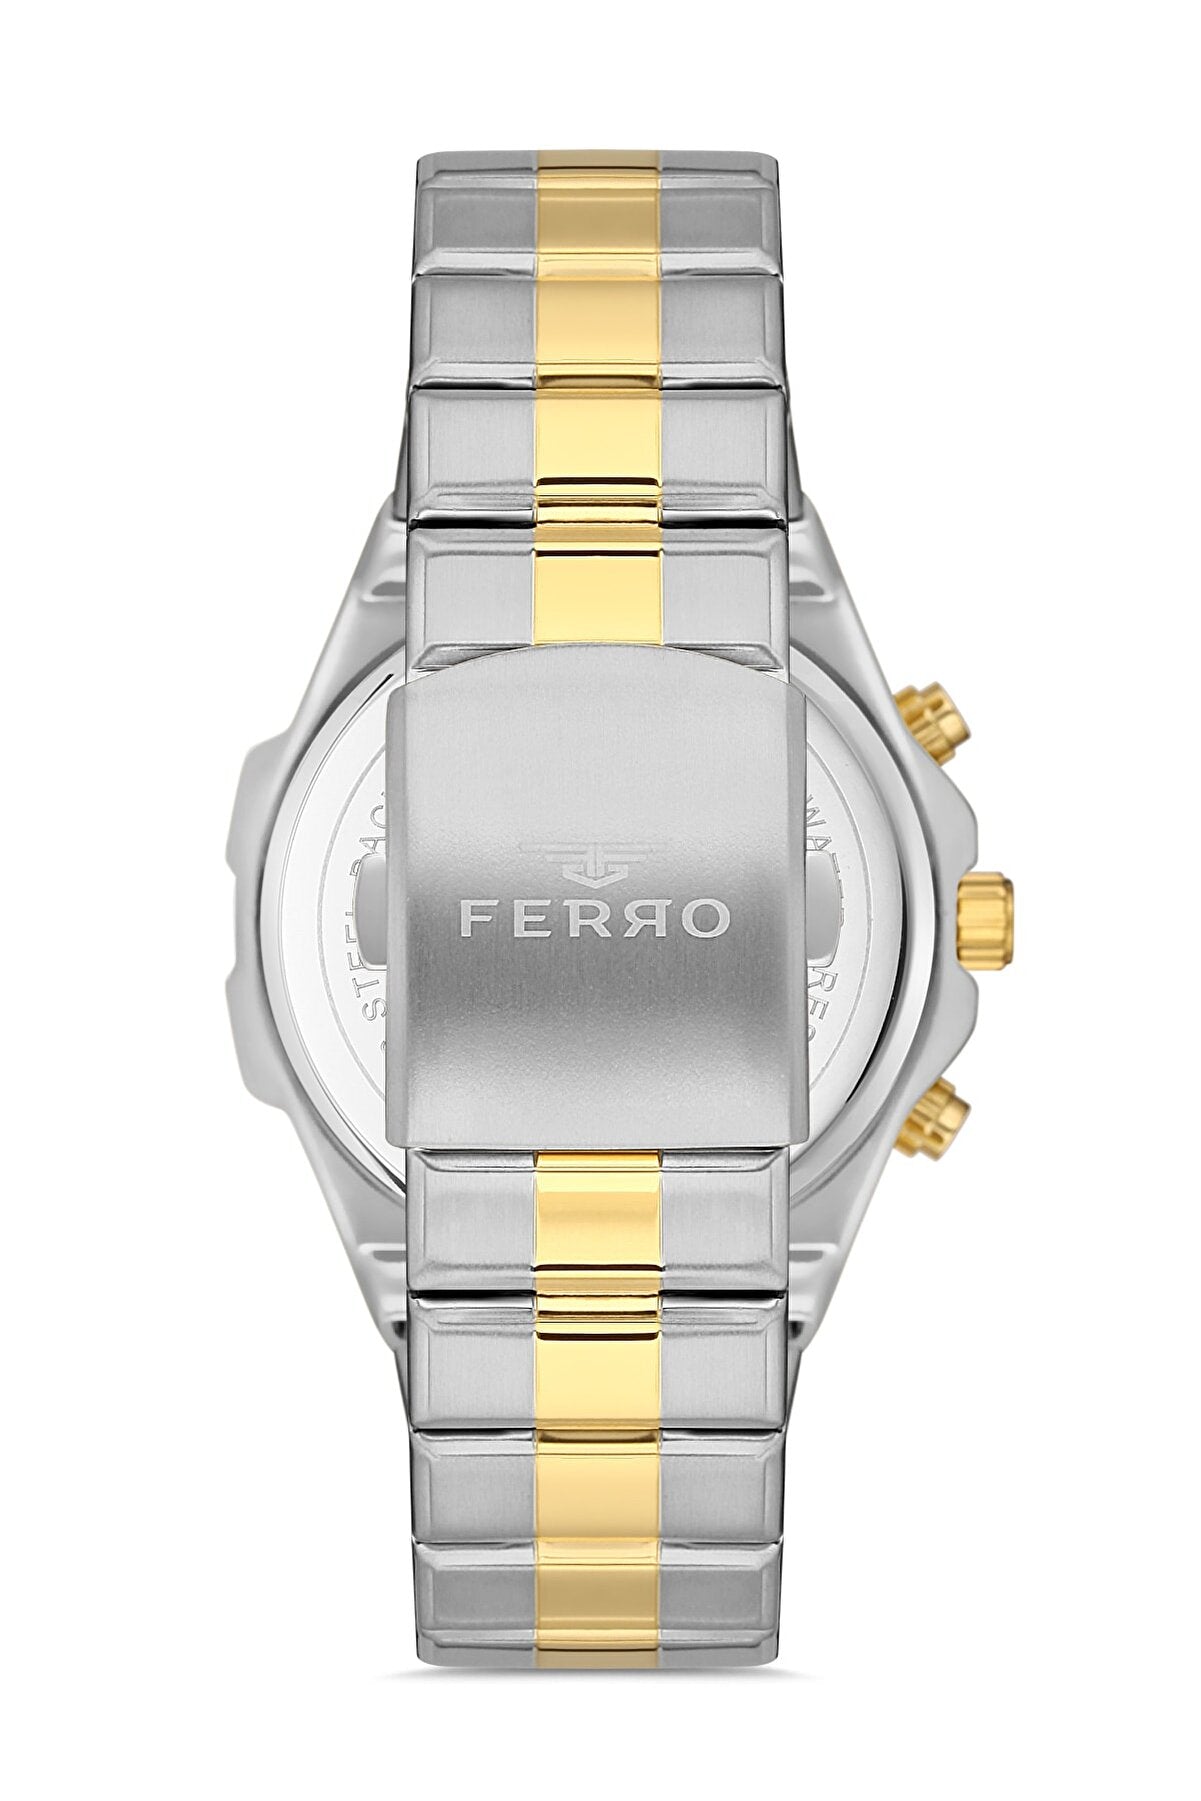 ferro-fm31356a-d10-mens-watch